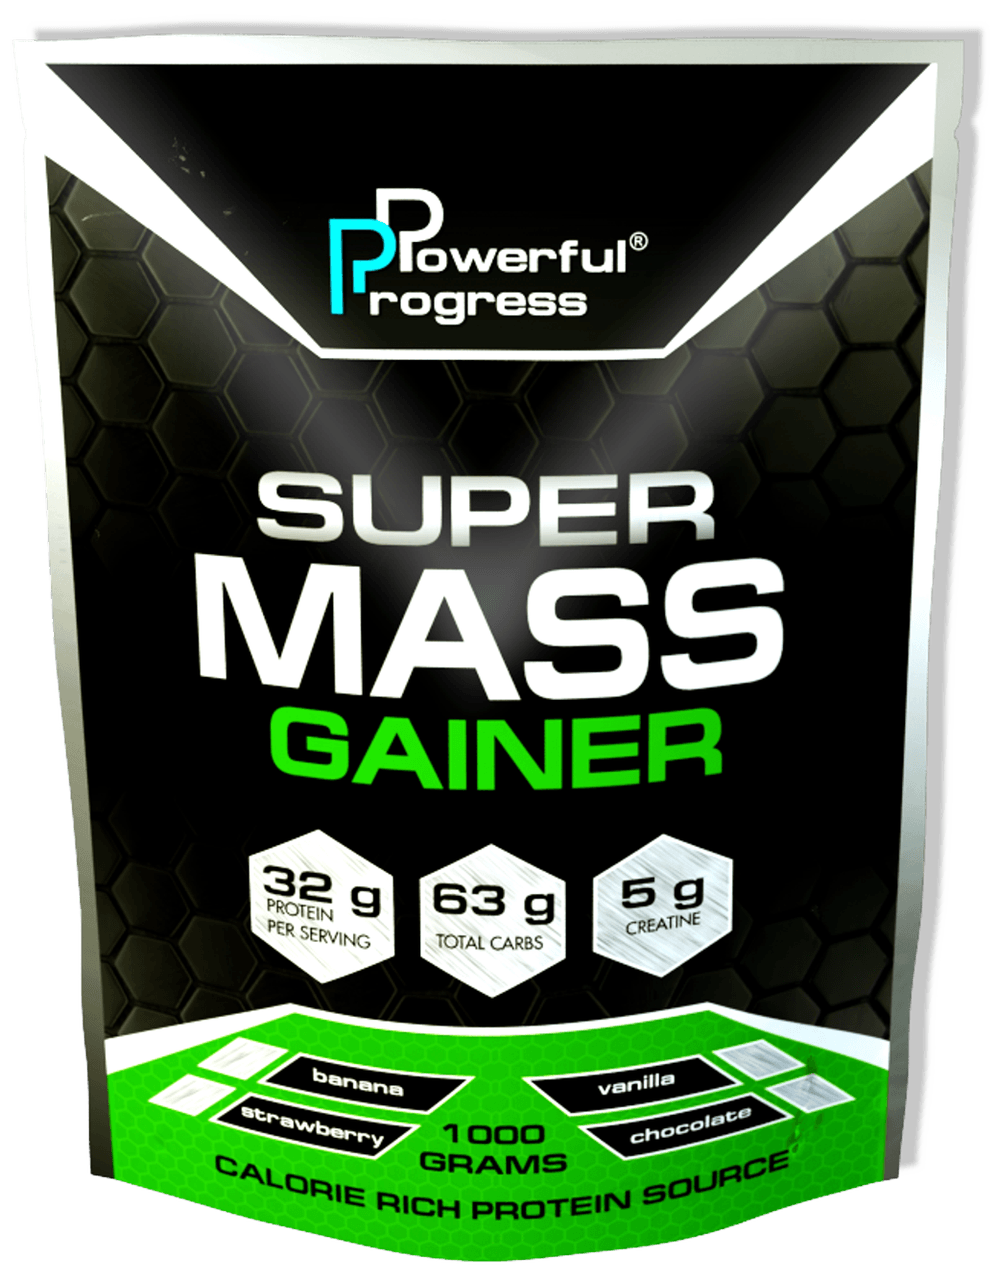 Super Mass Gainer, 1000 g, Powerful Progress. Gainer. Mass Gain Energy & Endurance recovery 